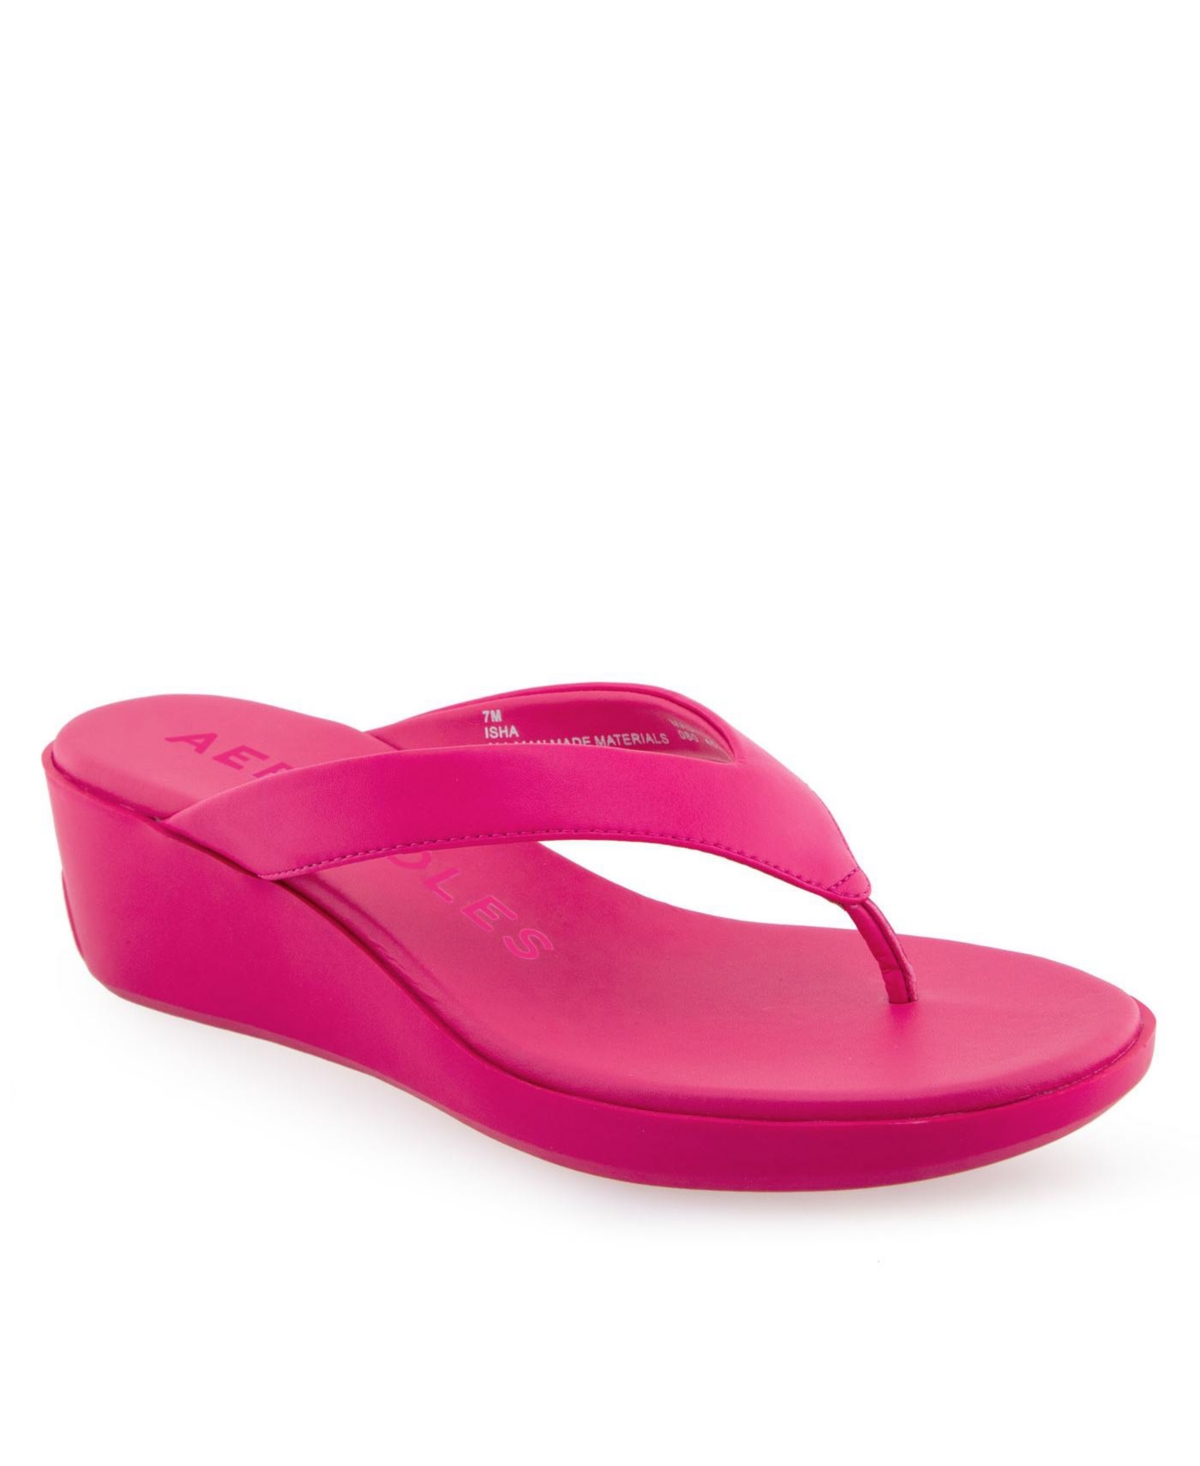 Women's Isha Wedge Sandals - Virtual Pink Polyurethane